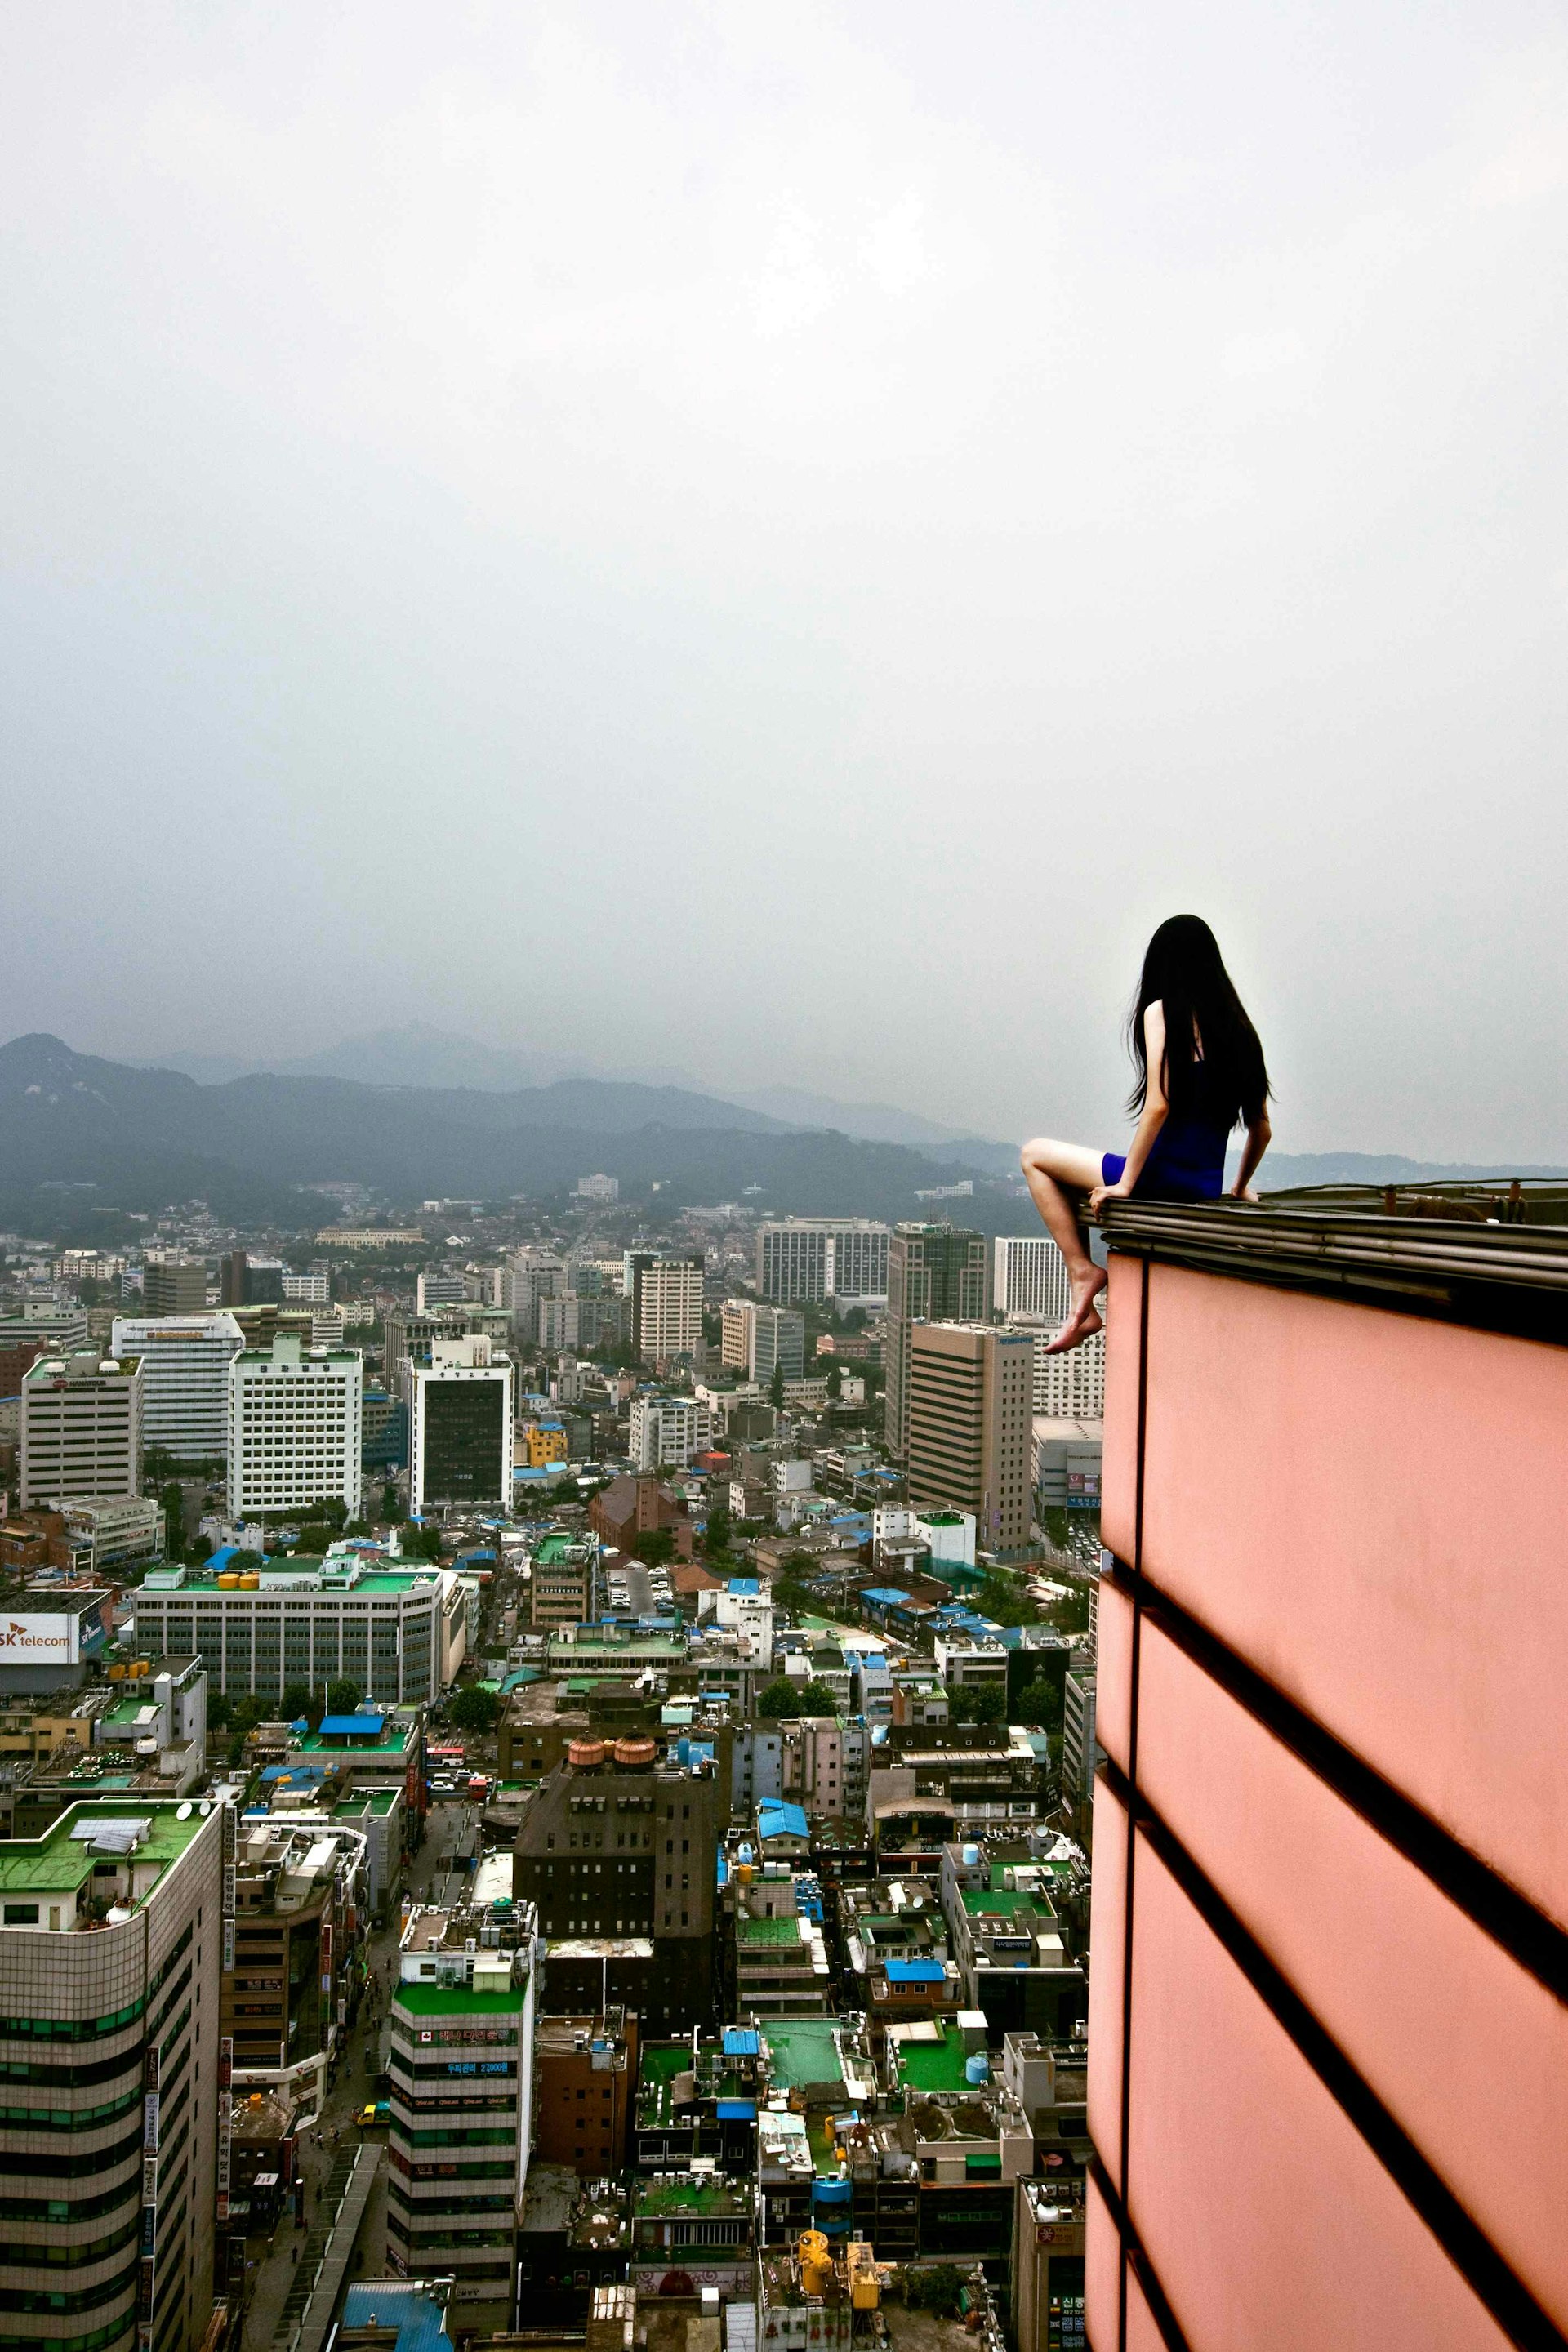 Ahn Jun from //Self-Portrait, Seoul, South Korea, 2009